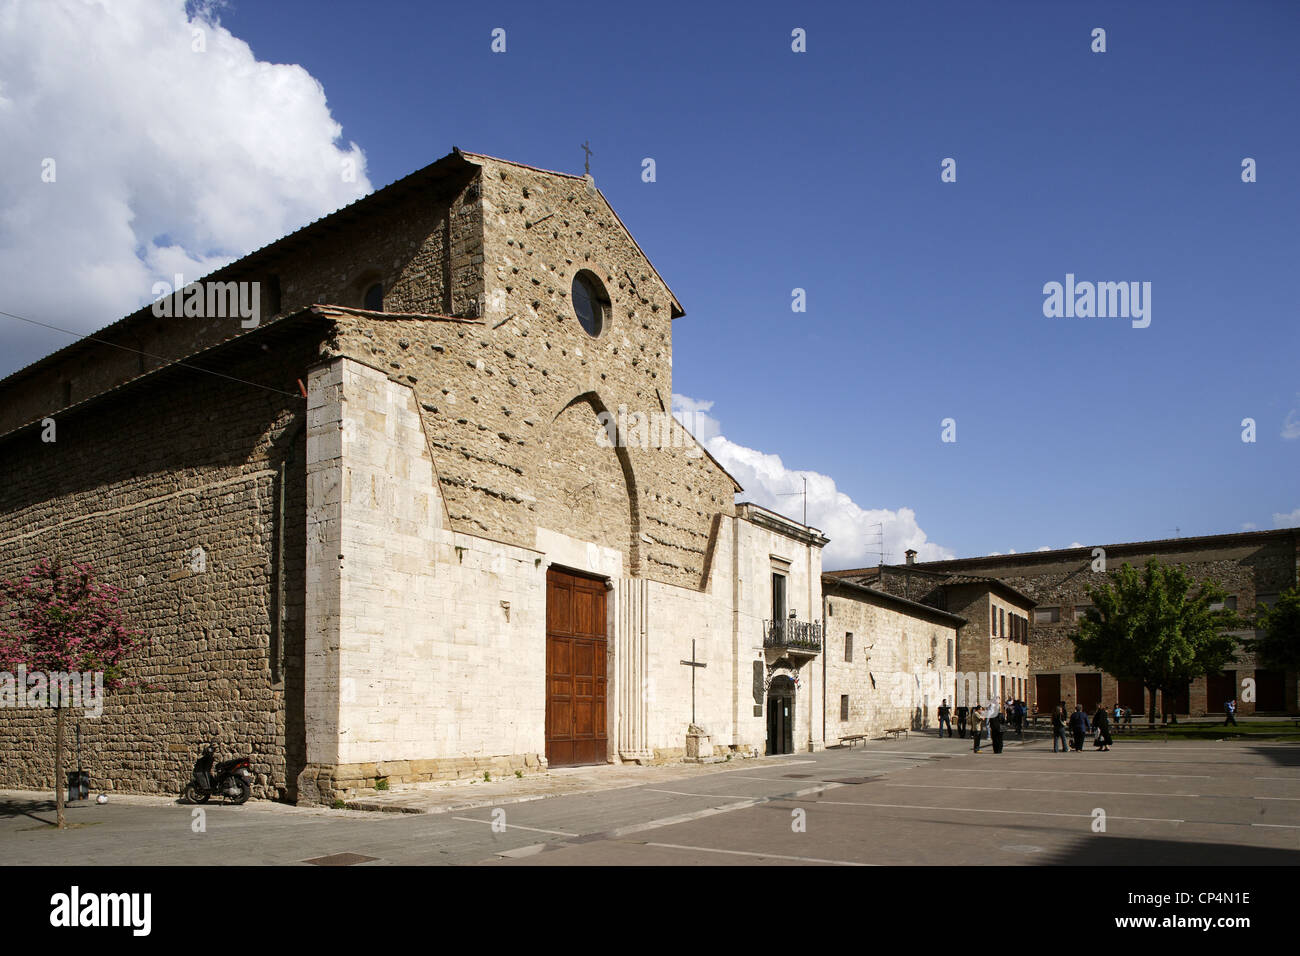 Church of Saint Augustin. Italy, Tuscany Region, Colle Val d'Elsa (Si). Stock Photo